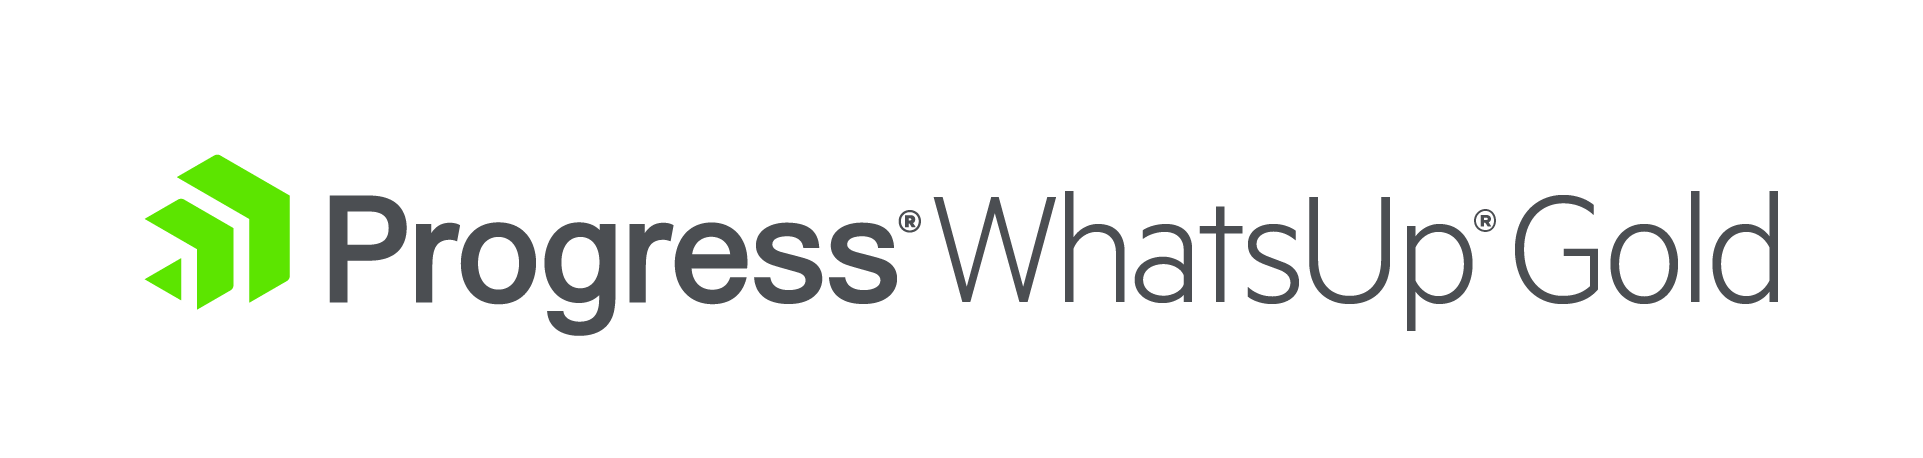 progress whatsup gold logo